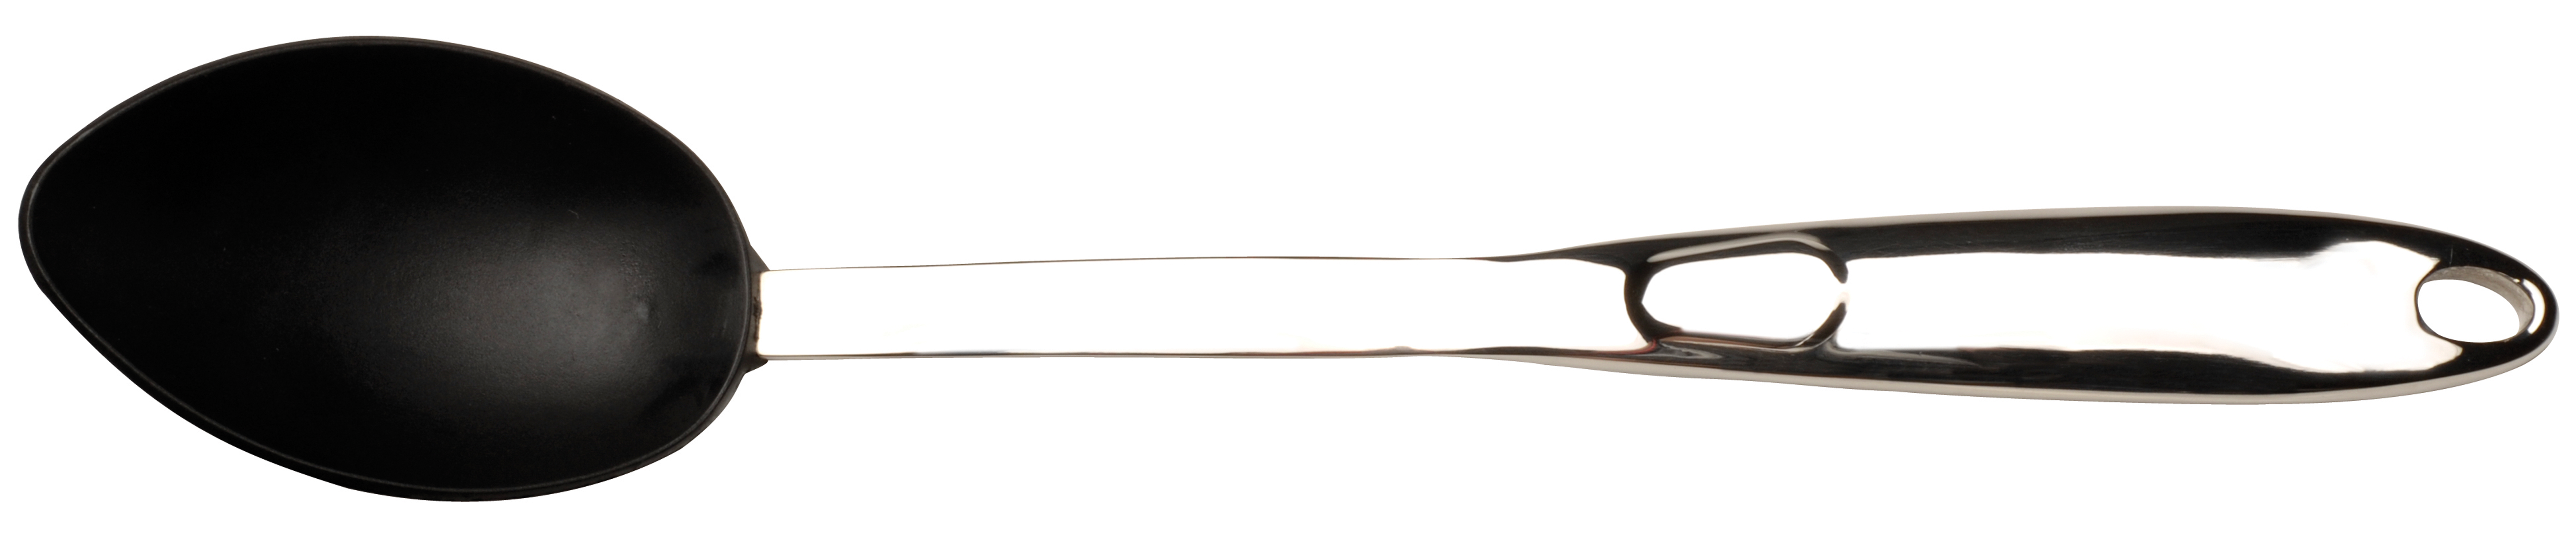 Straight Line Nylon Serving Spoon